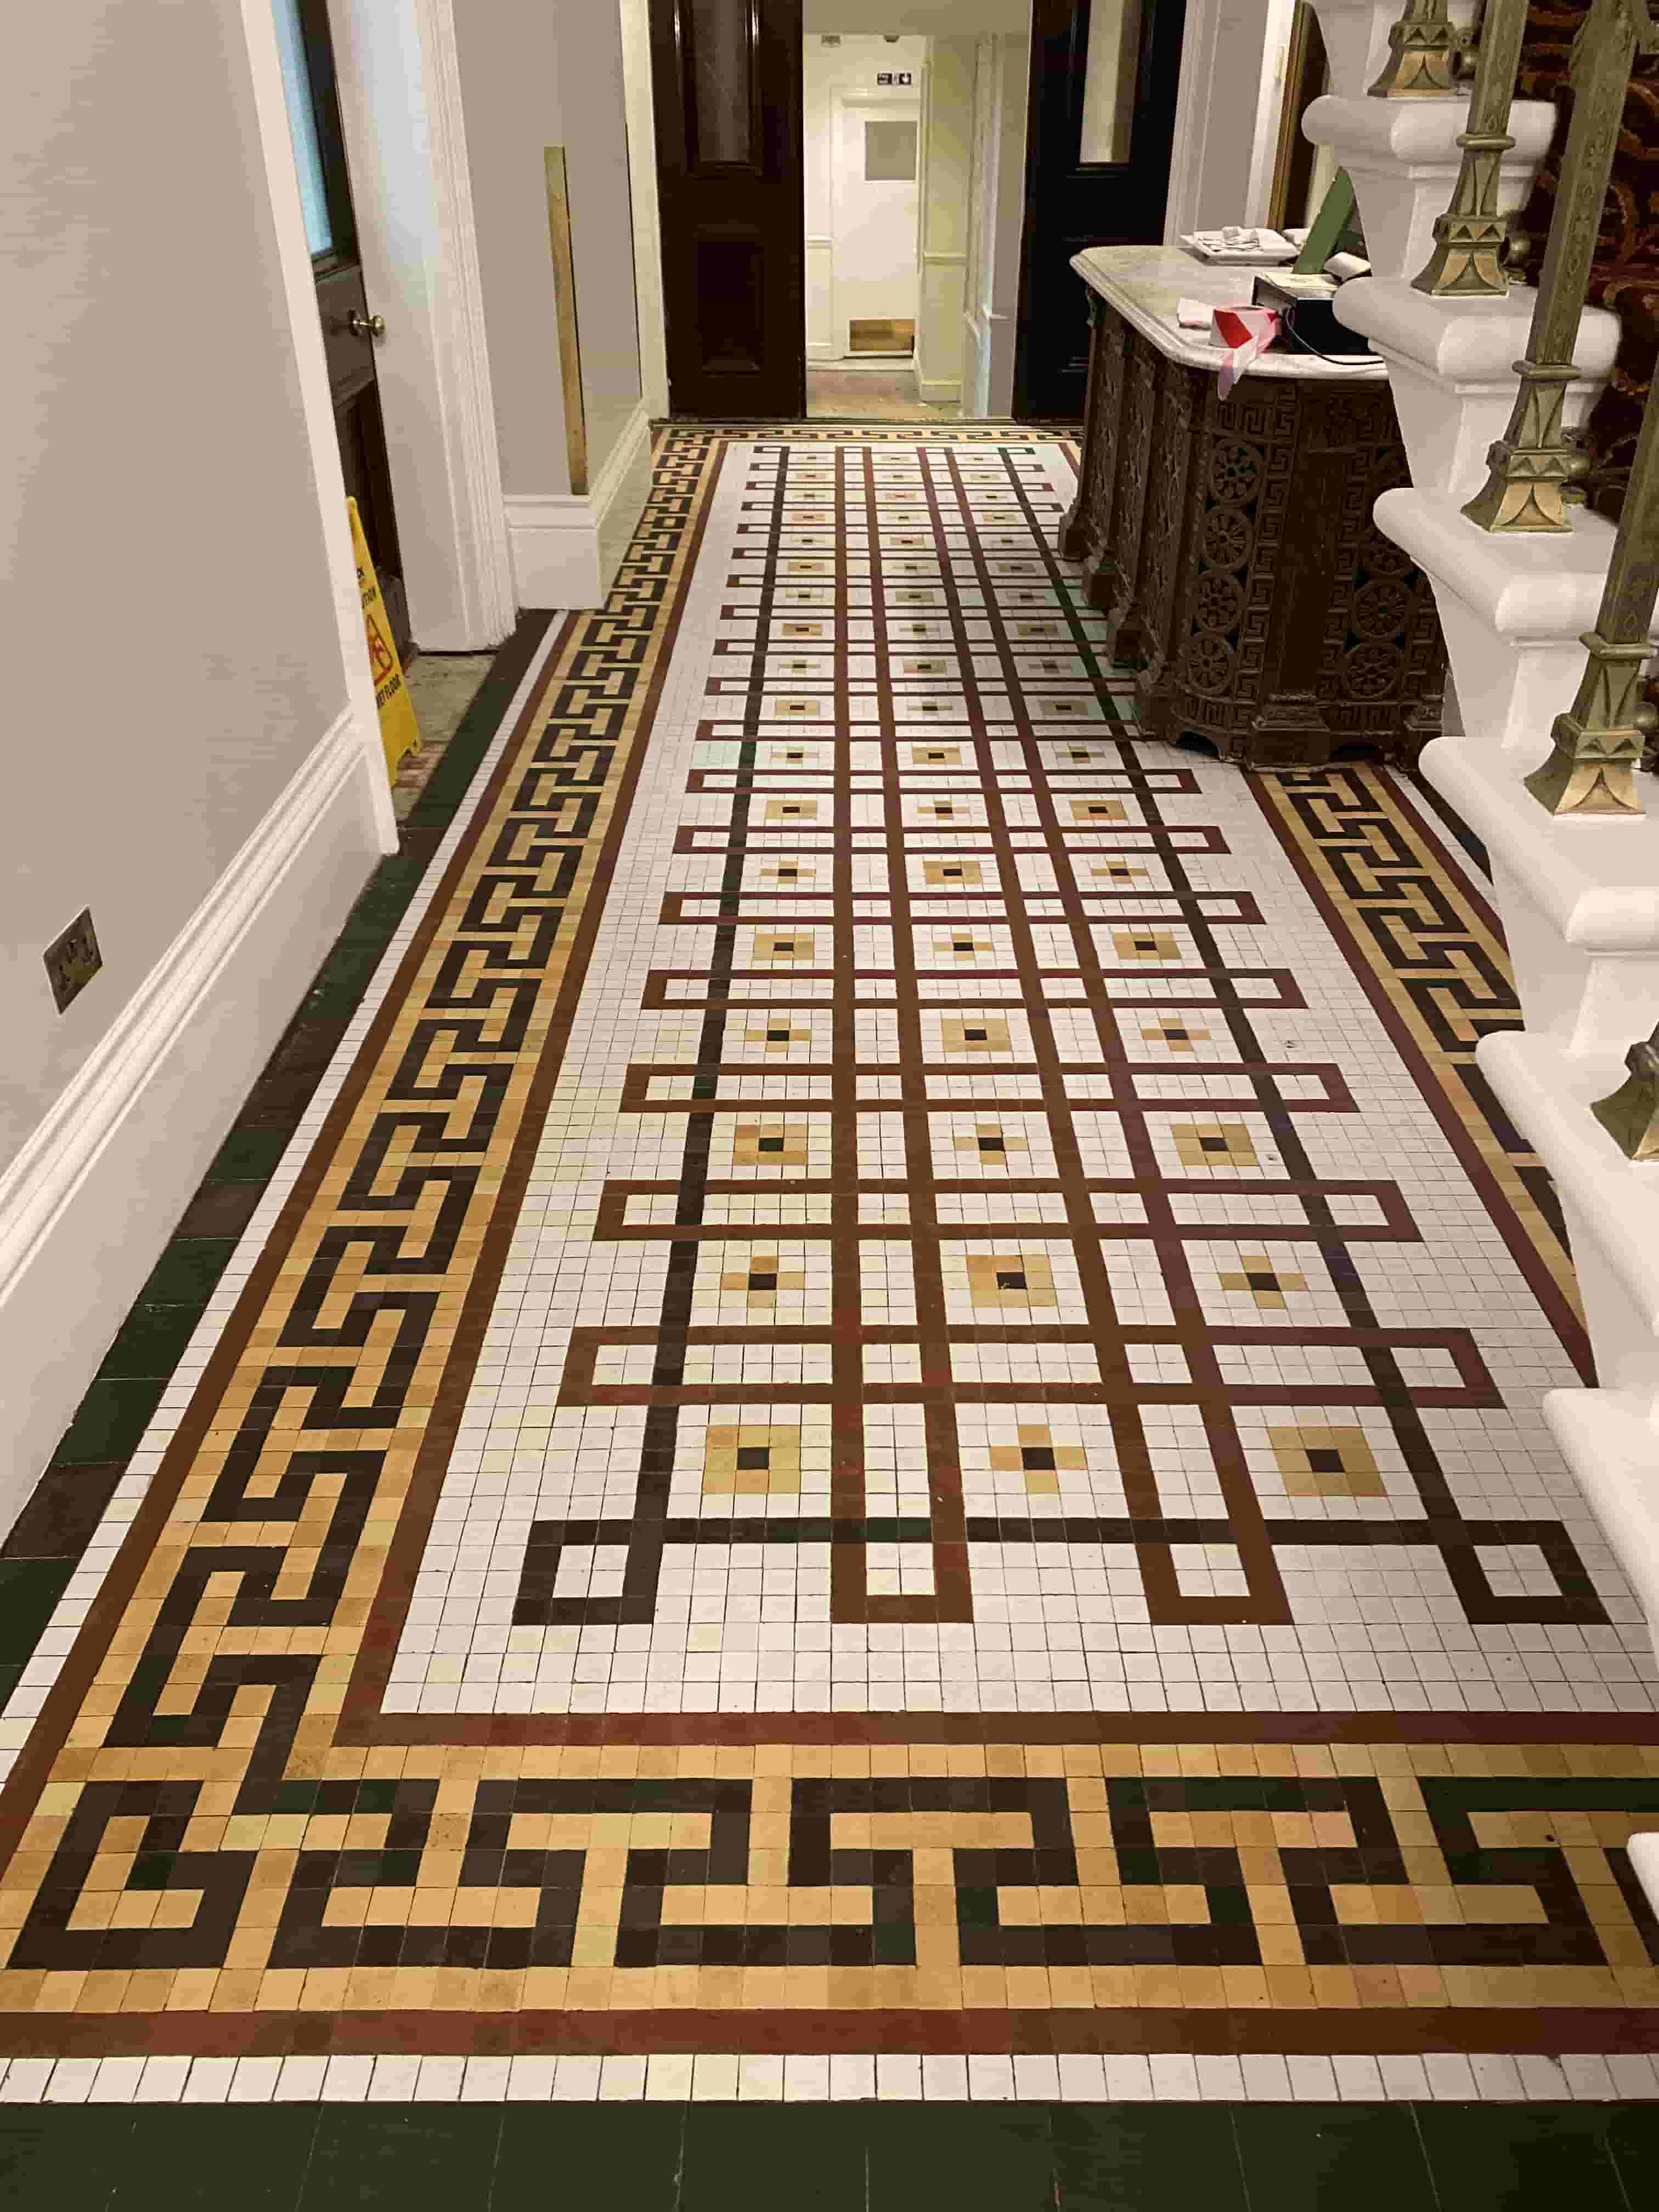 Hotel Tesserae Stone Mosaic Tiled Floor After Renovation Taplow